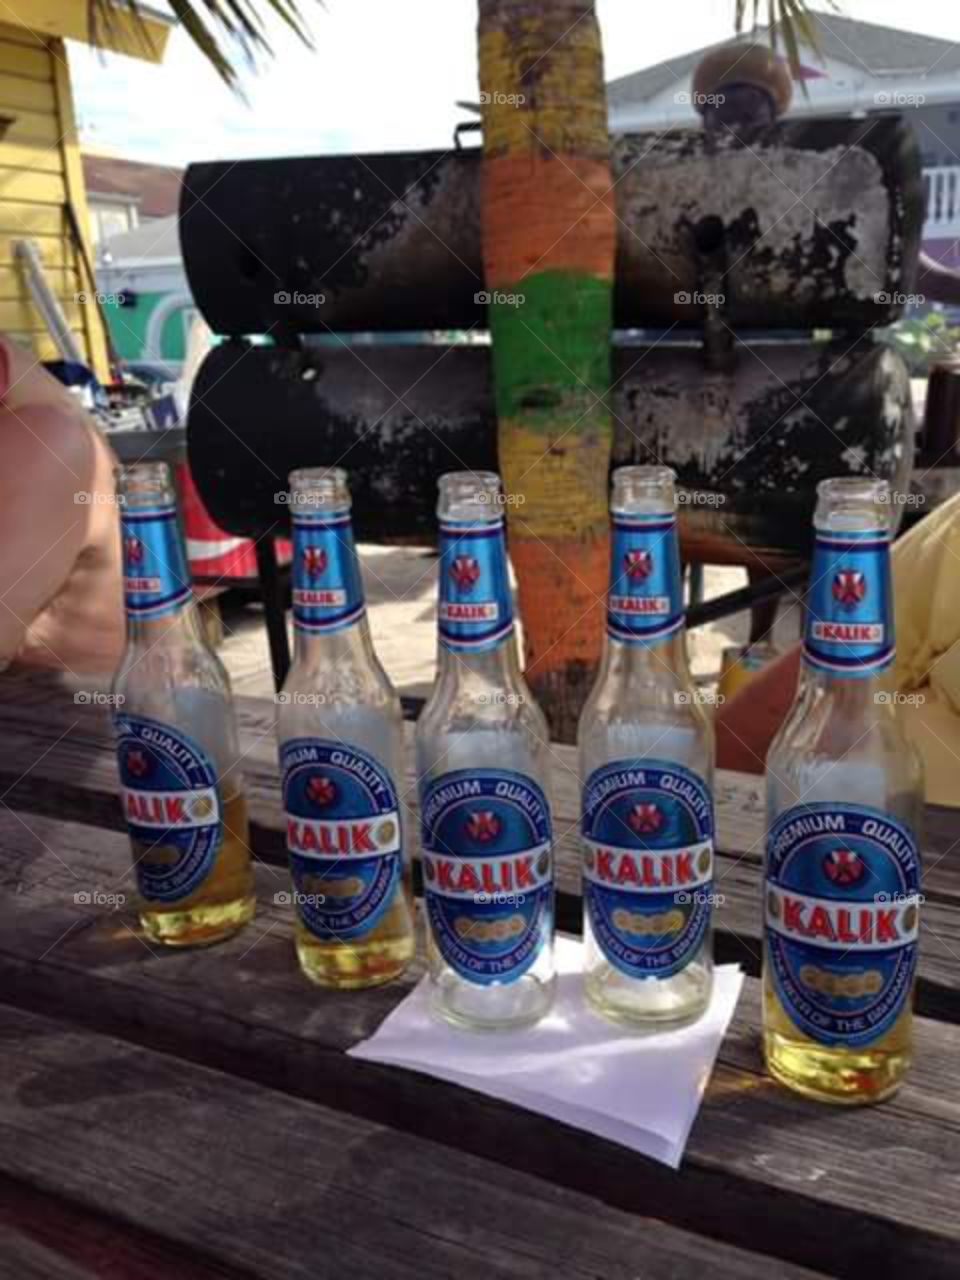 Drinking in the Bahamas